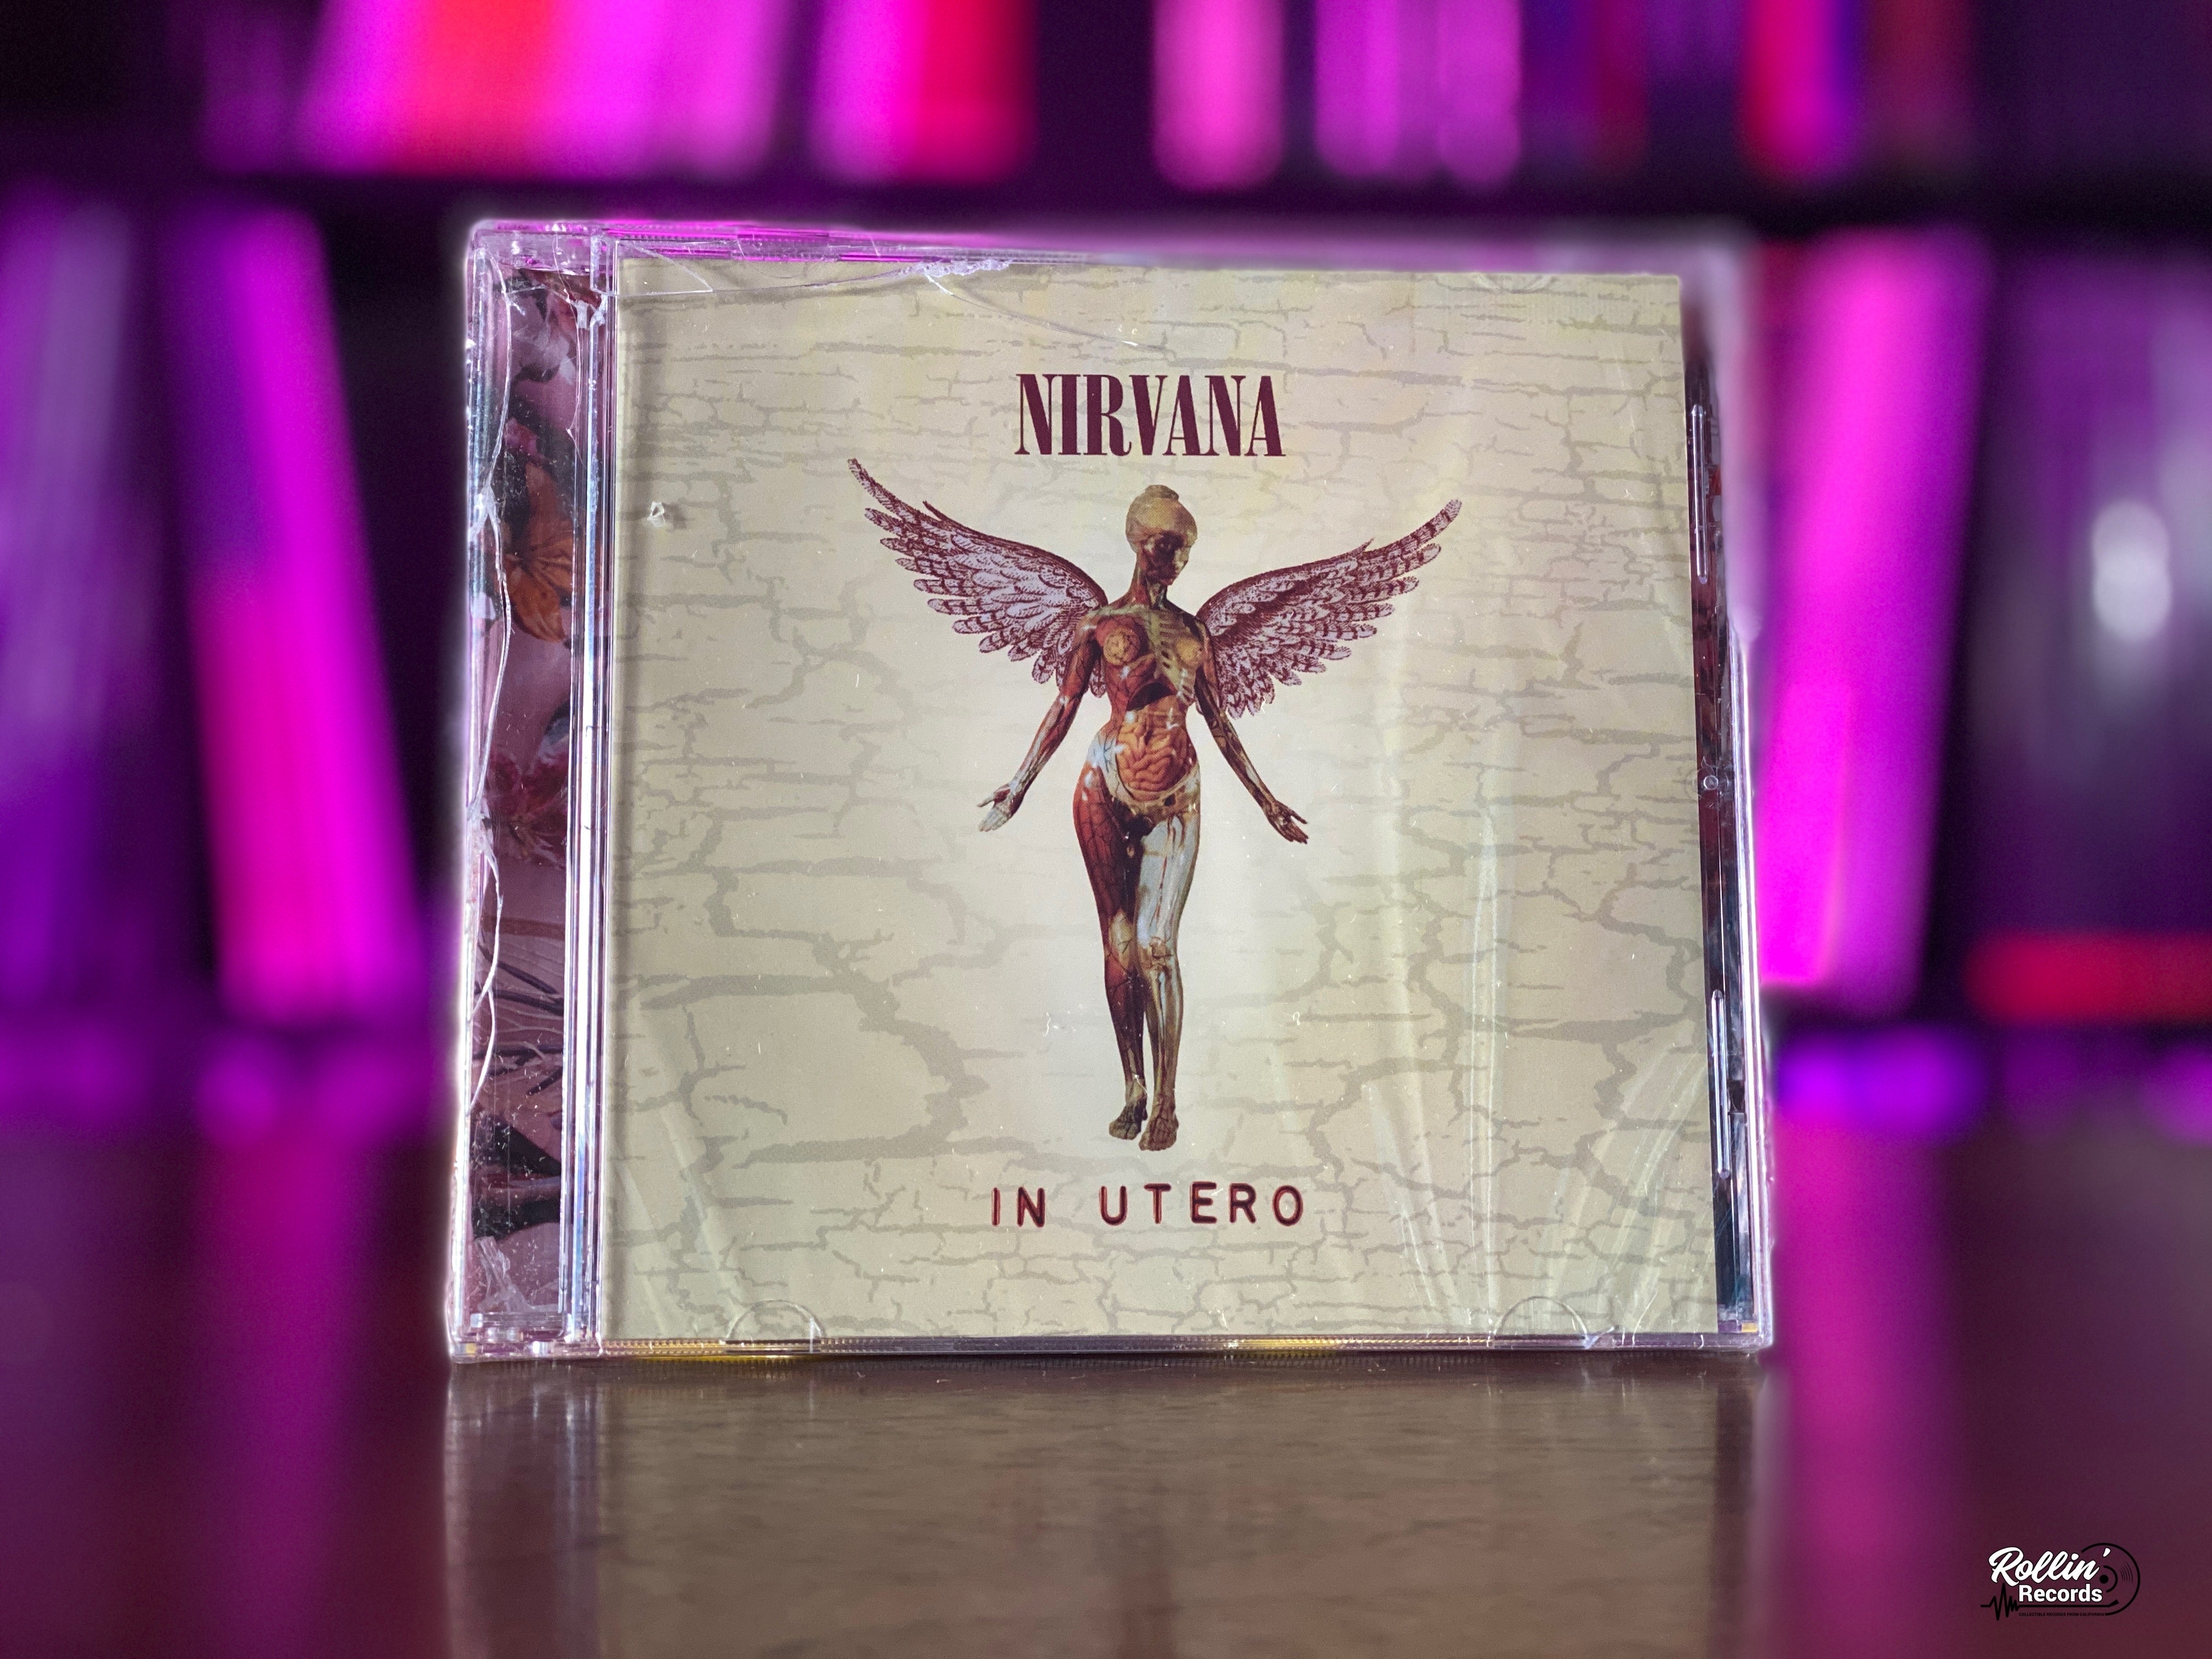 Nirvana/In Utero LP レコード 1993年オリジナル レア盤 - 洋楽